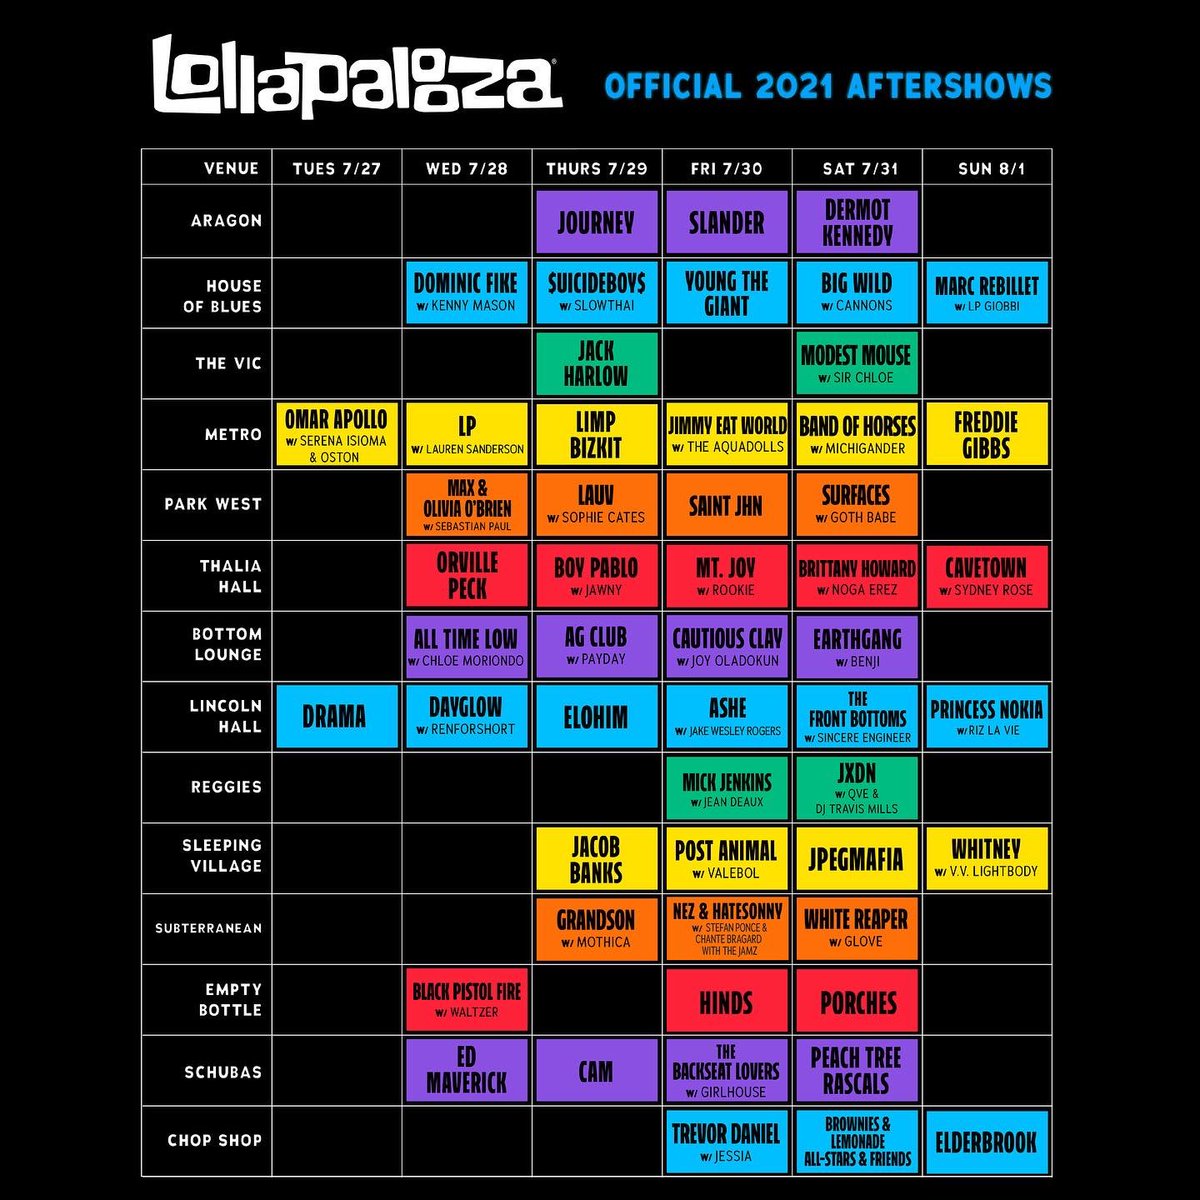 Lollapalooza 2021 lineup